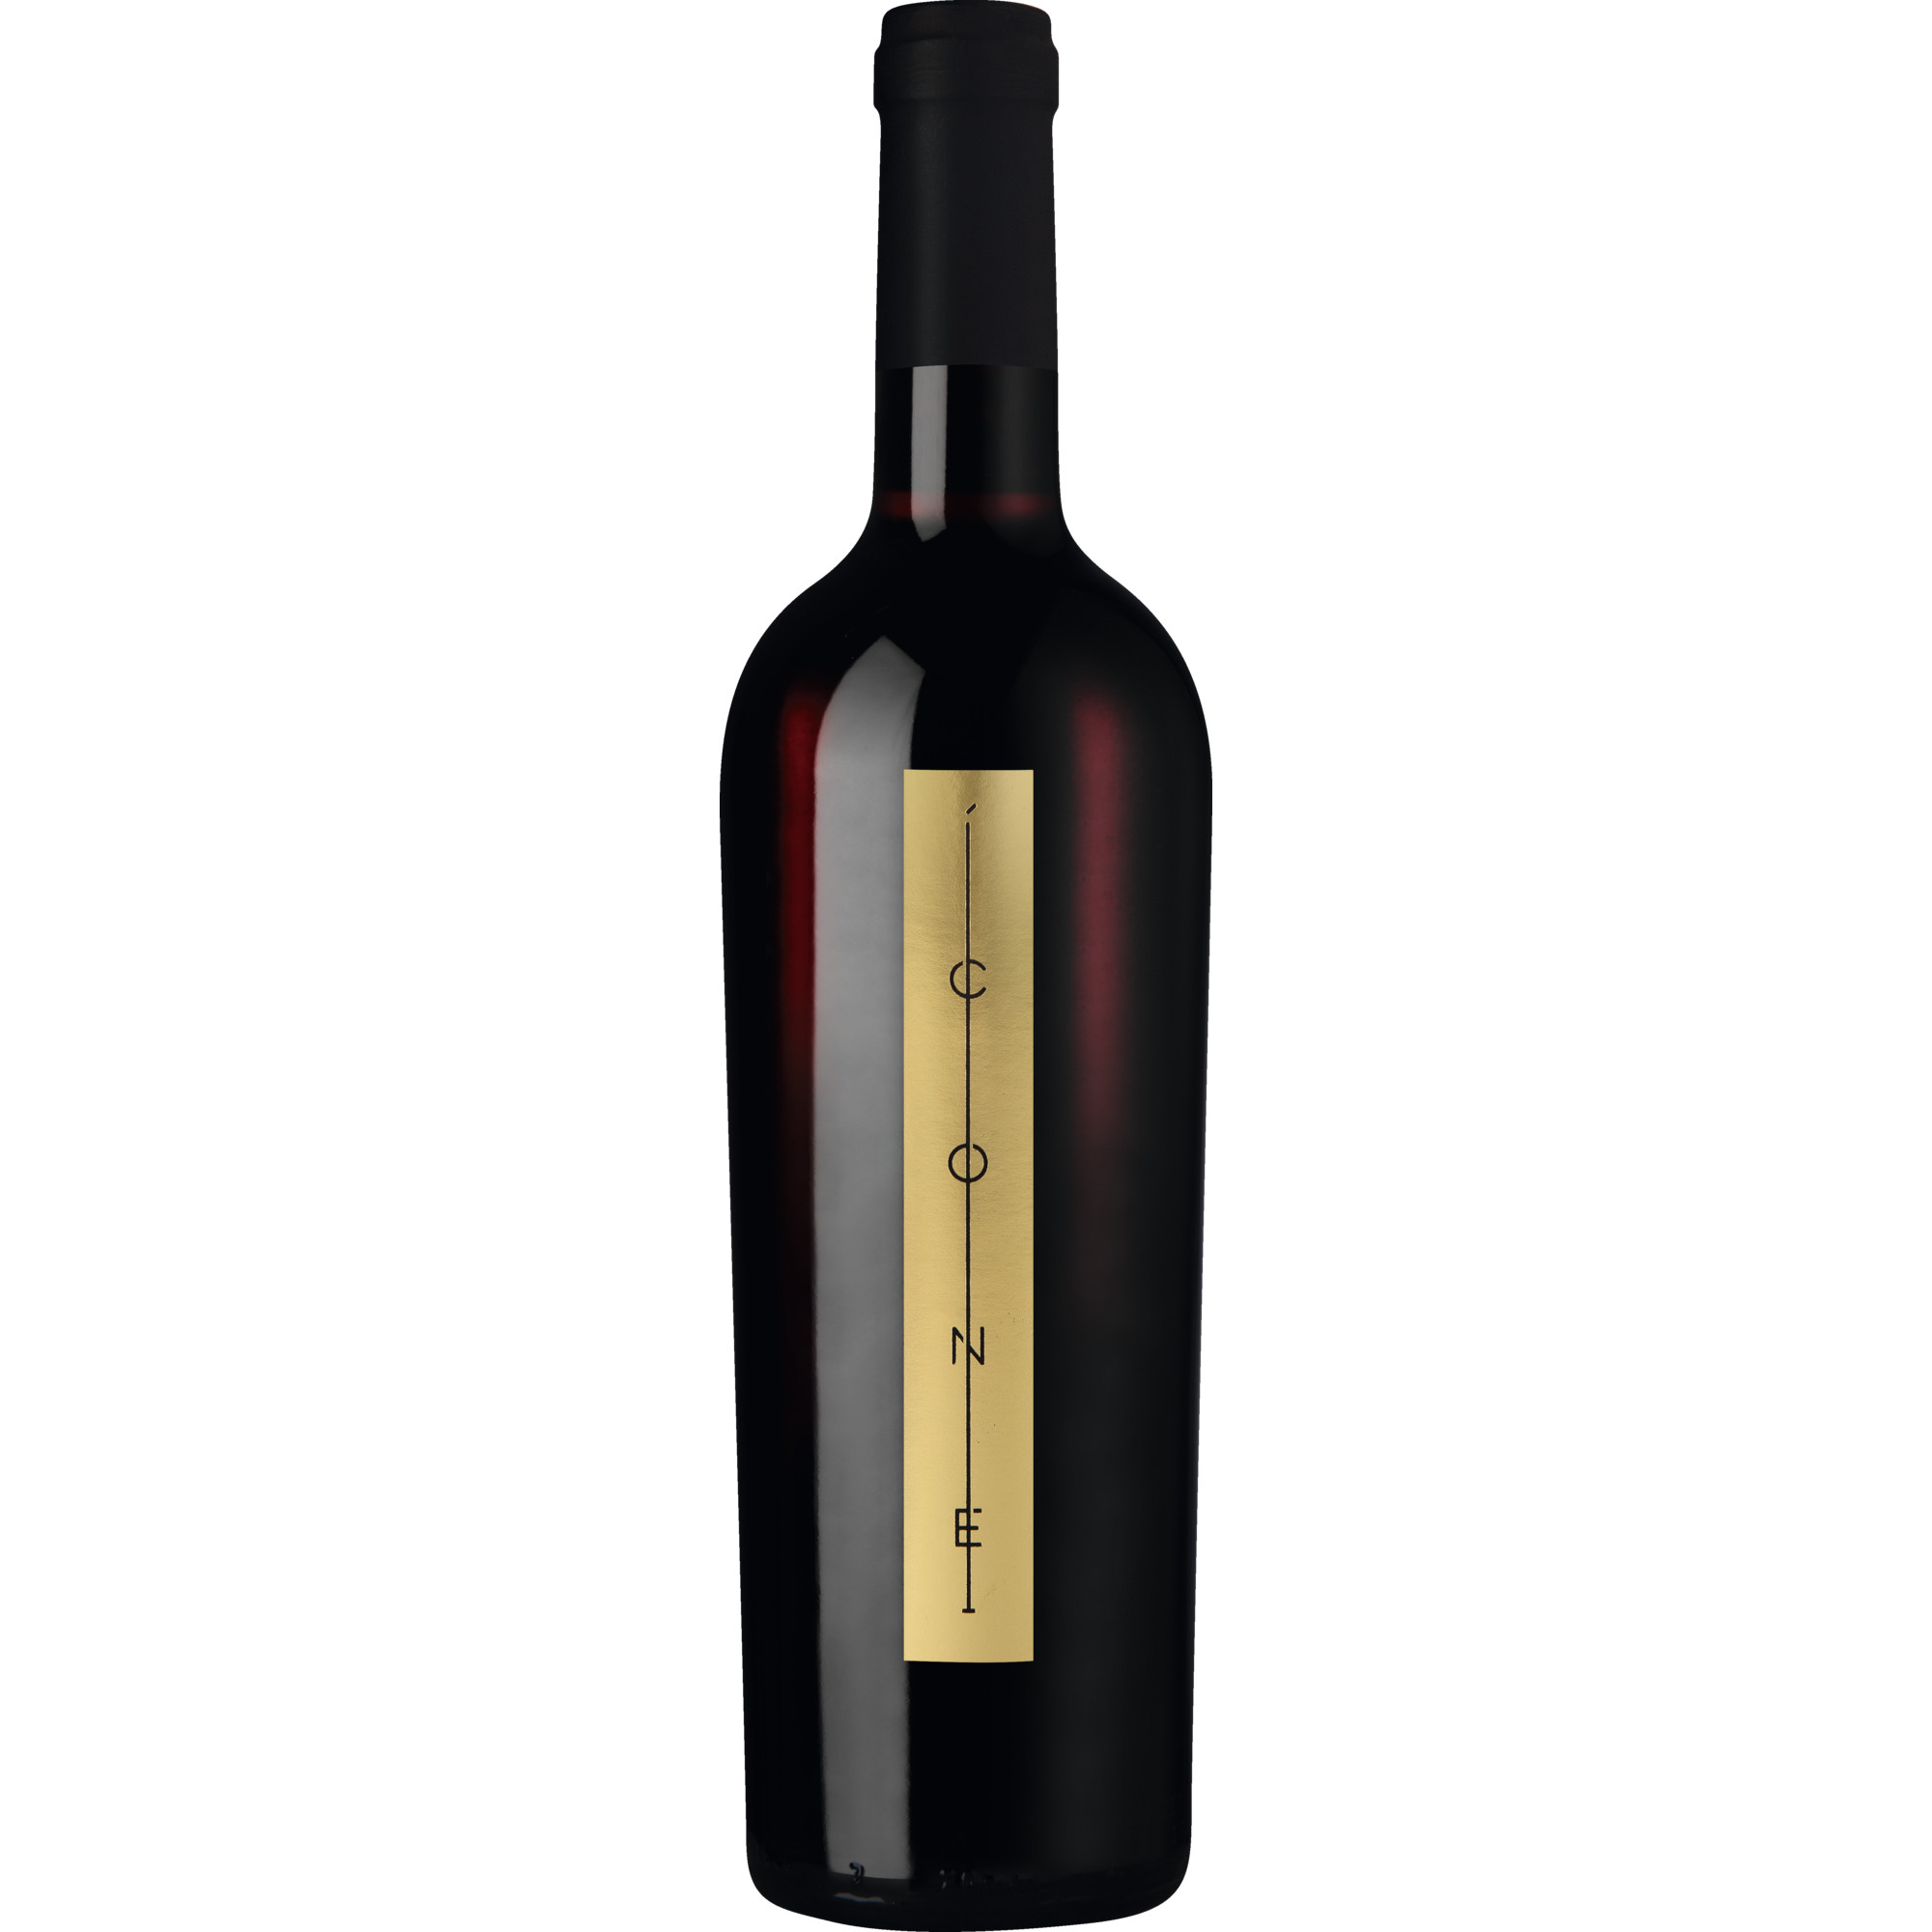 Vega Sicilia »Valbuena« 5° Año Reserva 2018 0.75L 14.5% Vol. Rotwein Trocken aus Spanien